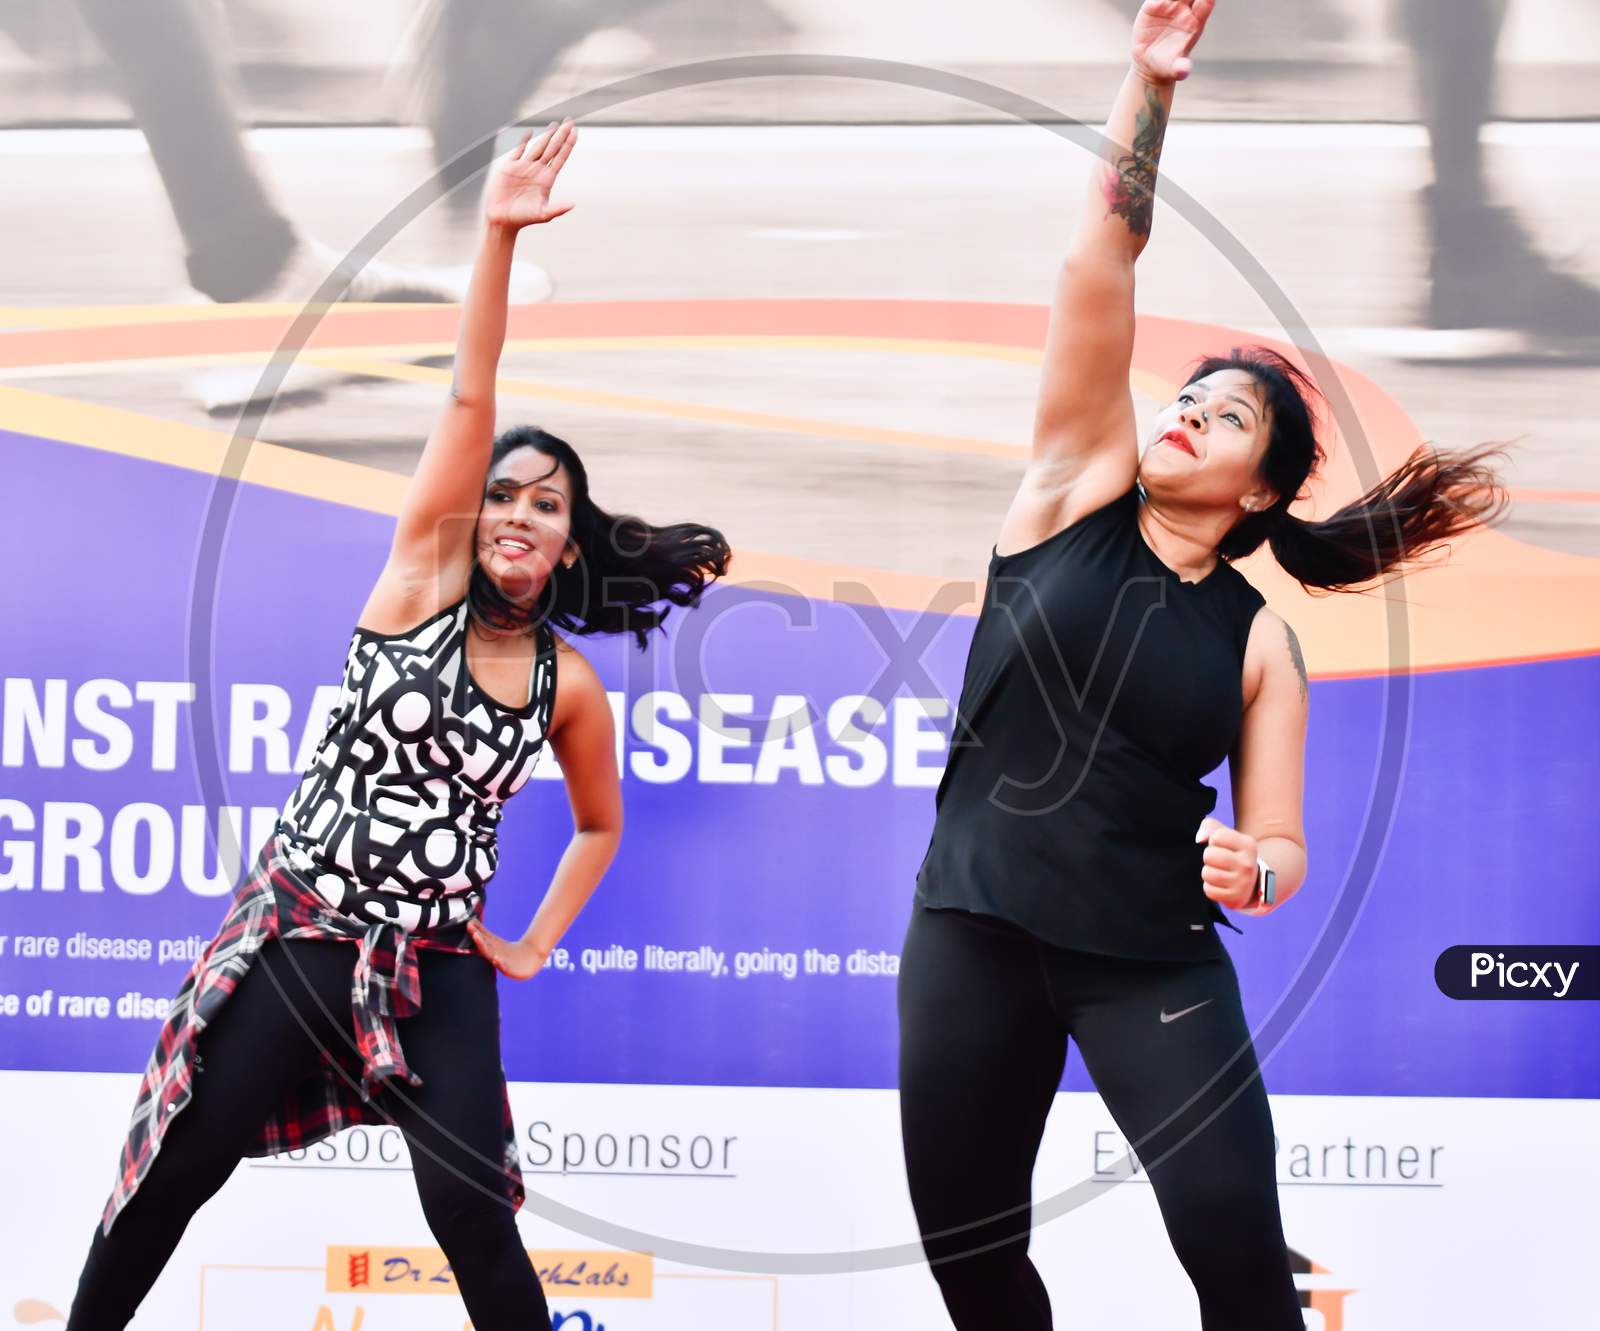 Zumba Dancers Performs Zumba During Marathon Warmup Session,Corporate yoga pose